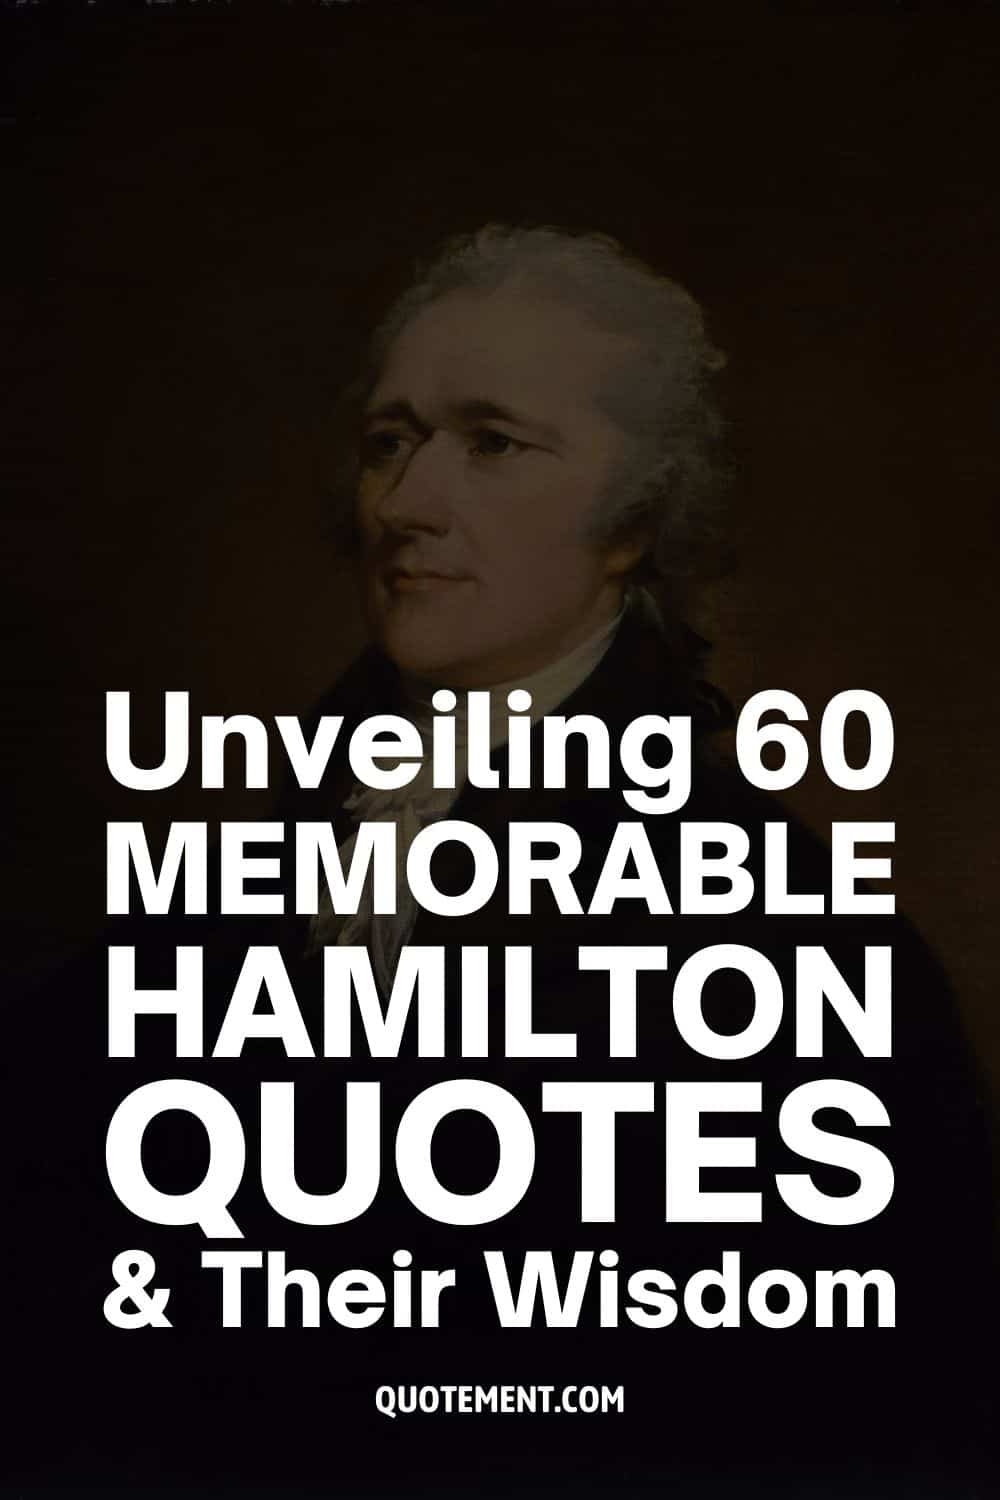 Unveiling 60 Memorable Hamilton Quotes and Their Wisdom
